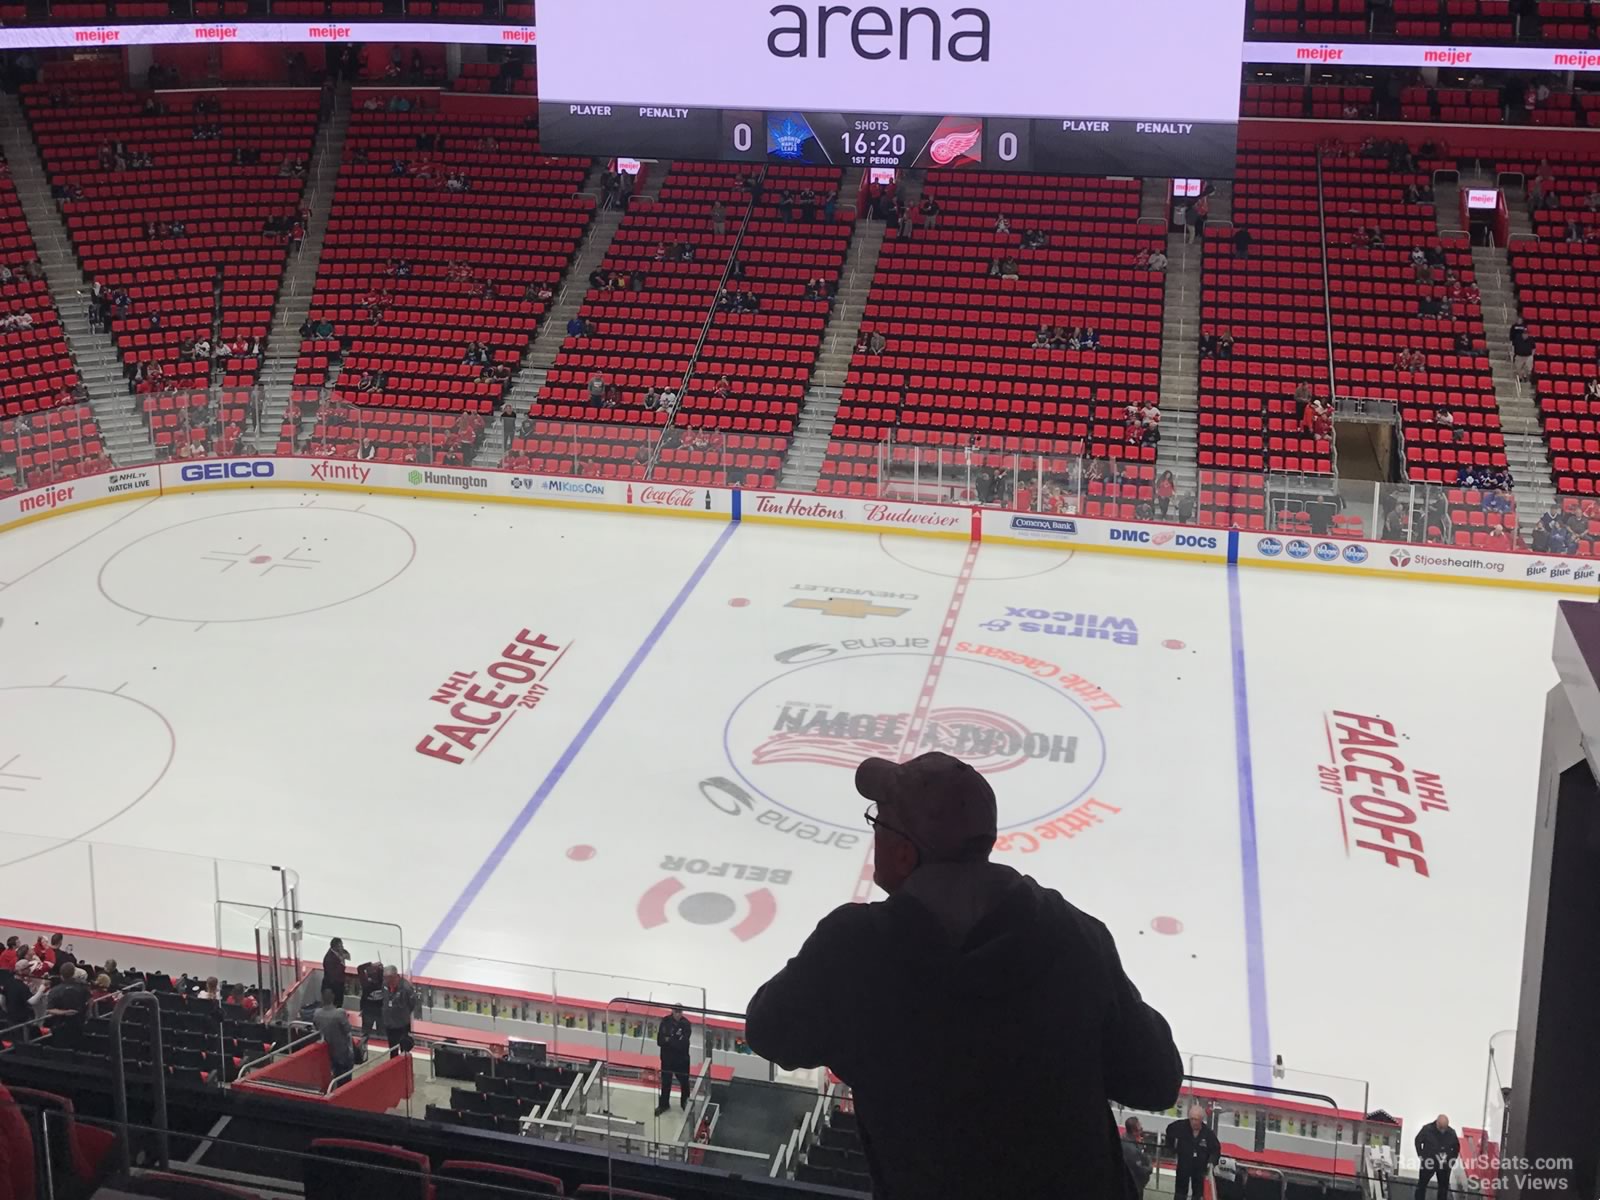 mezzanine 27, row 4 seat view  for hockey - little caesars arena